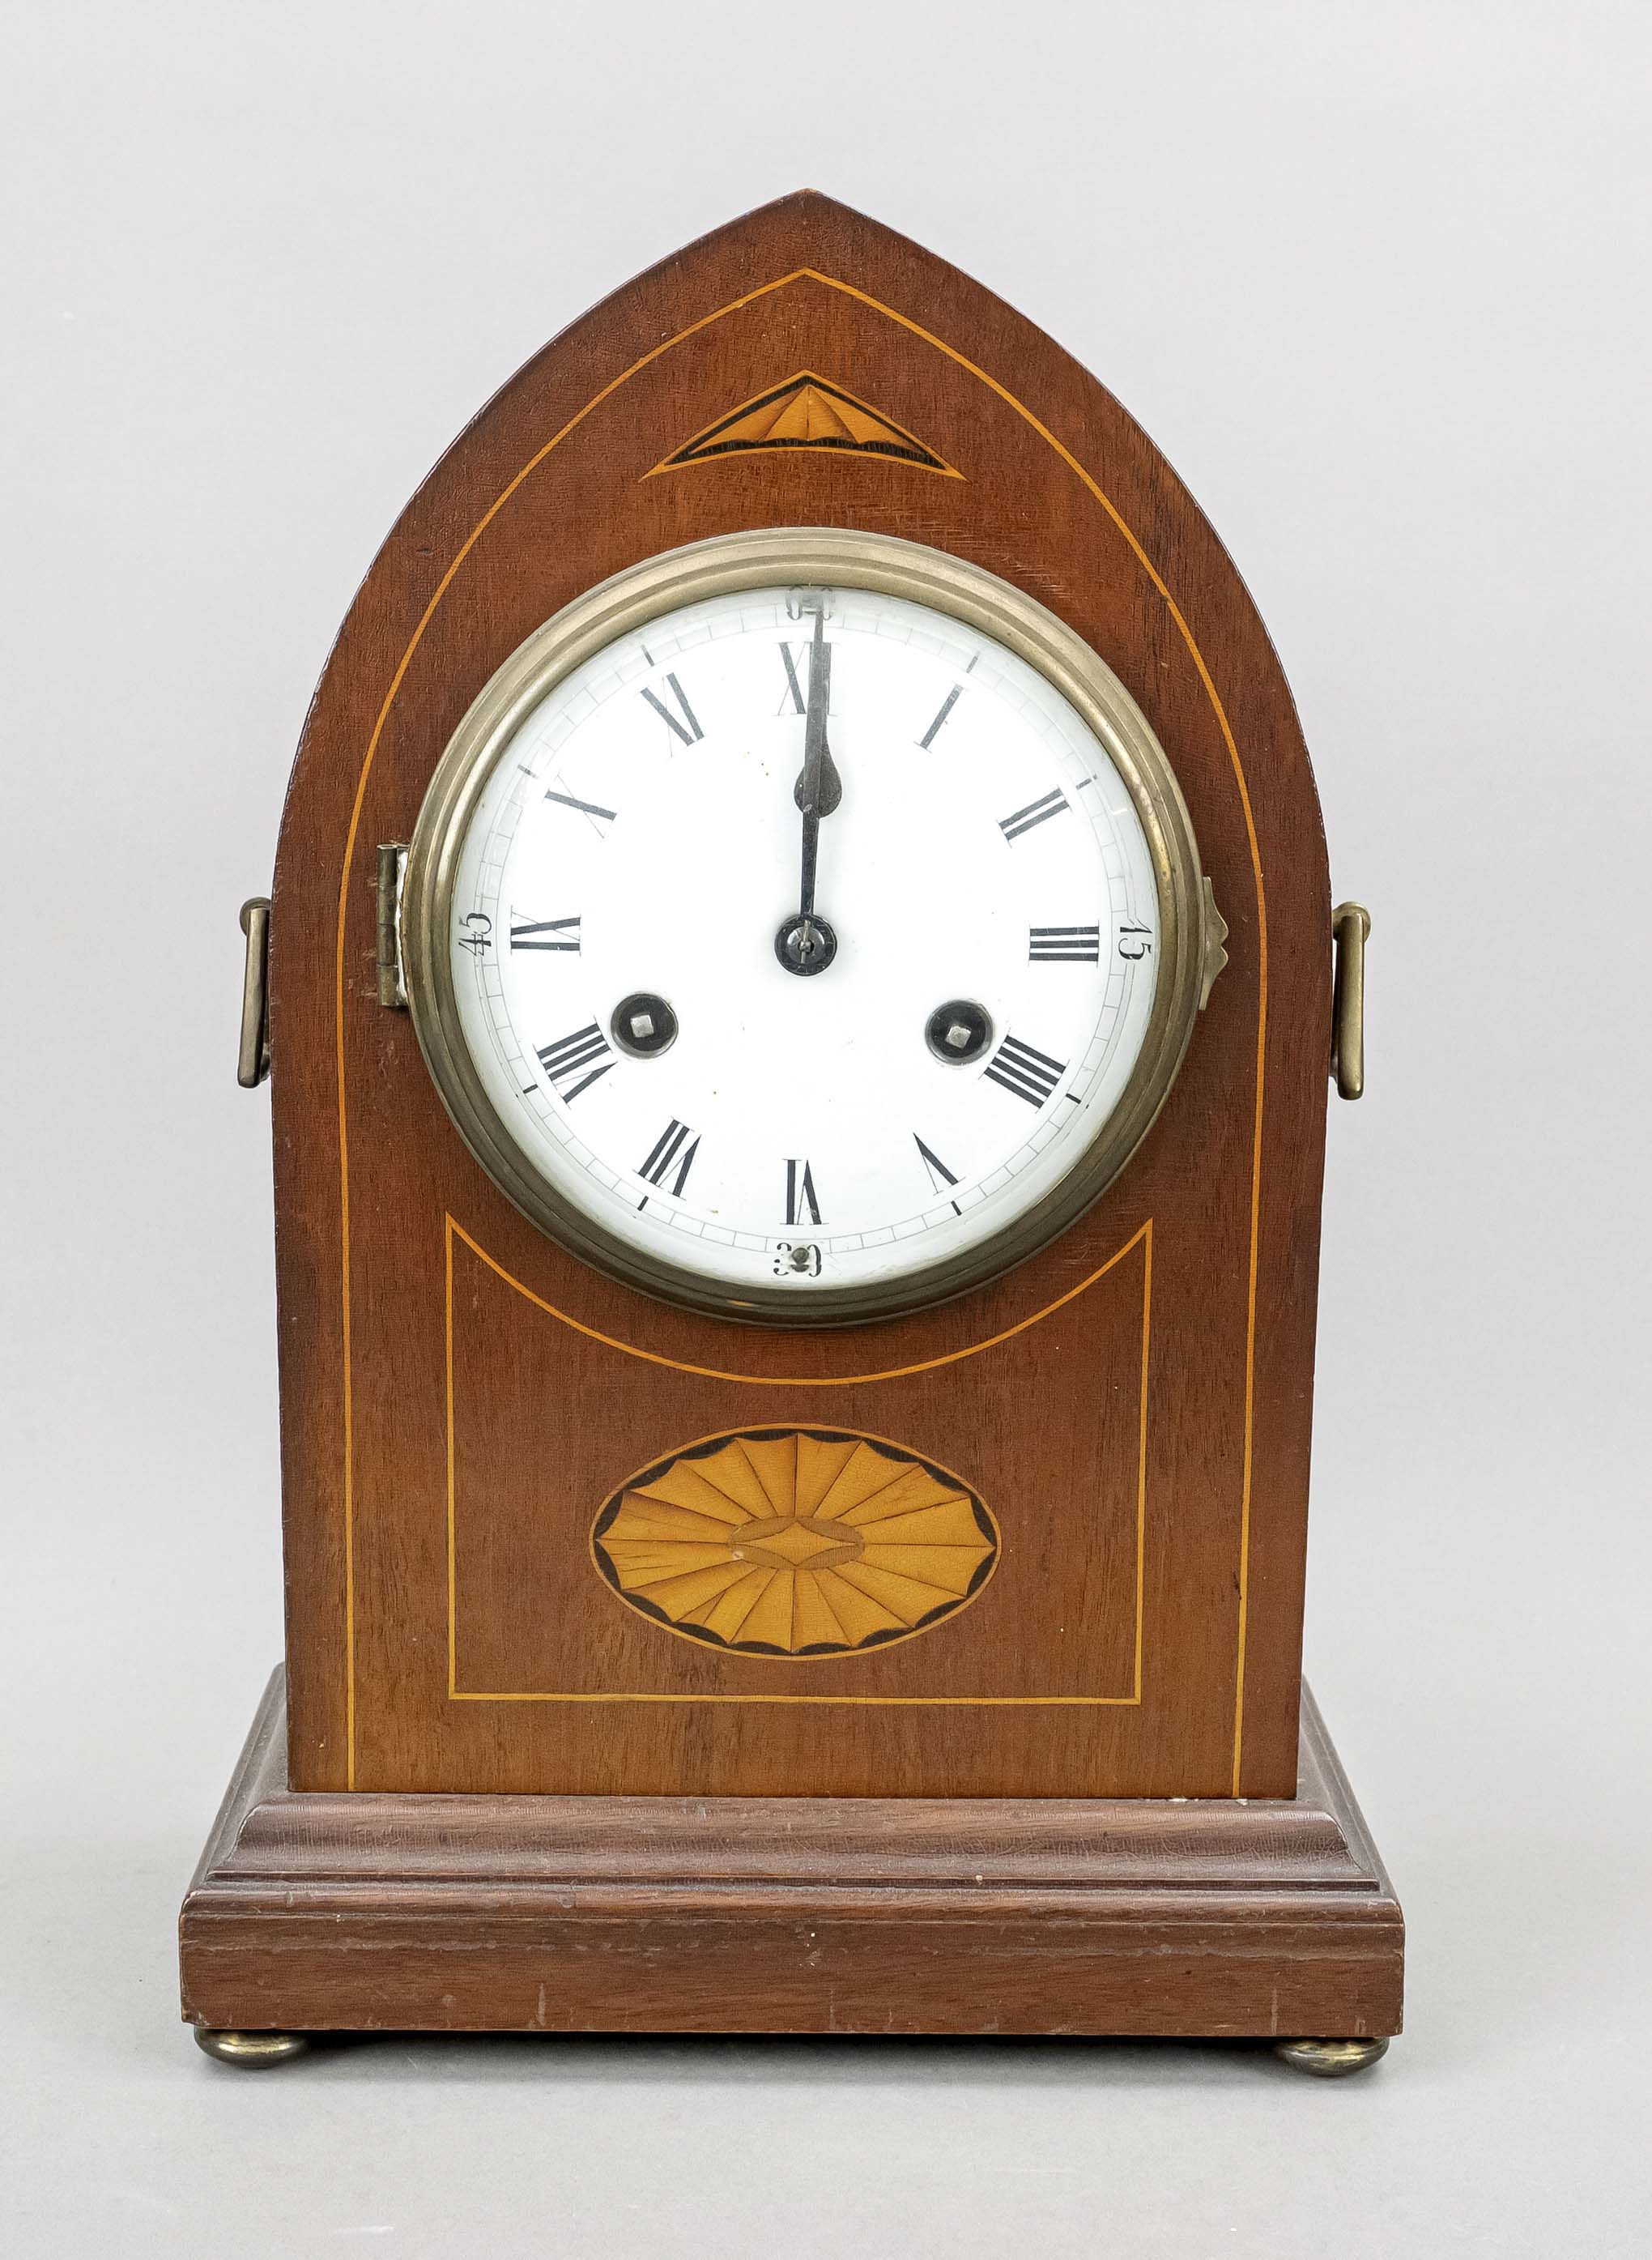 Table clock circa 1900, mahogany wood, marked Philipp Haas & Söhne, Uhrenfabrik Teutonia, St.